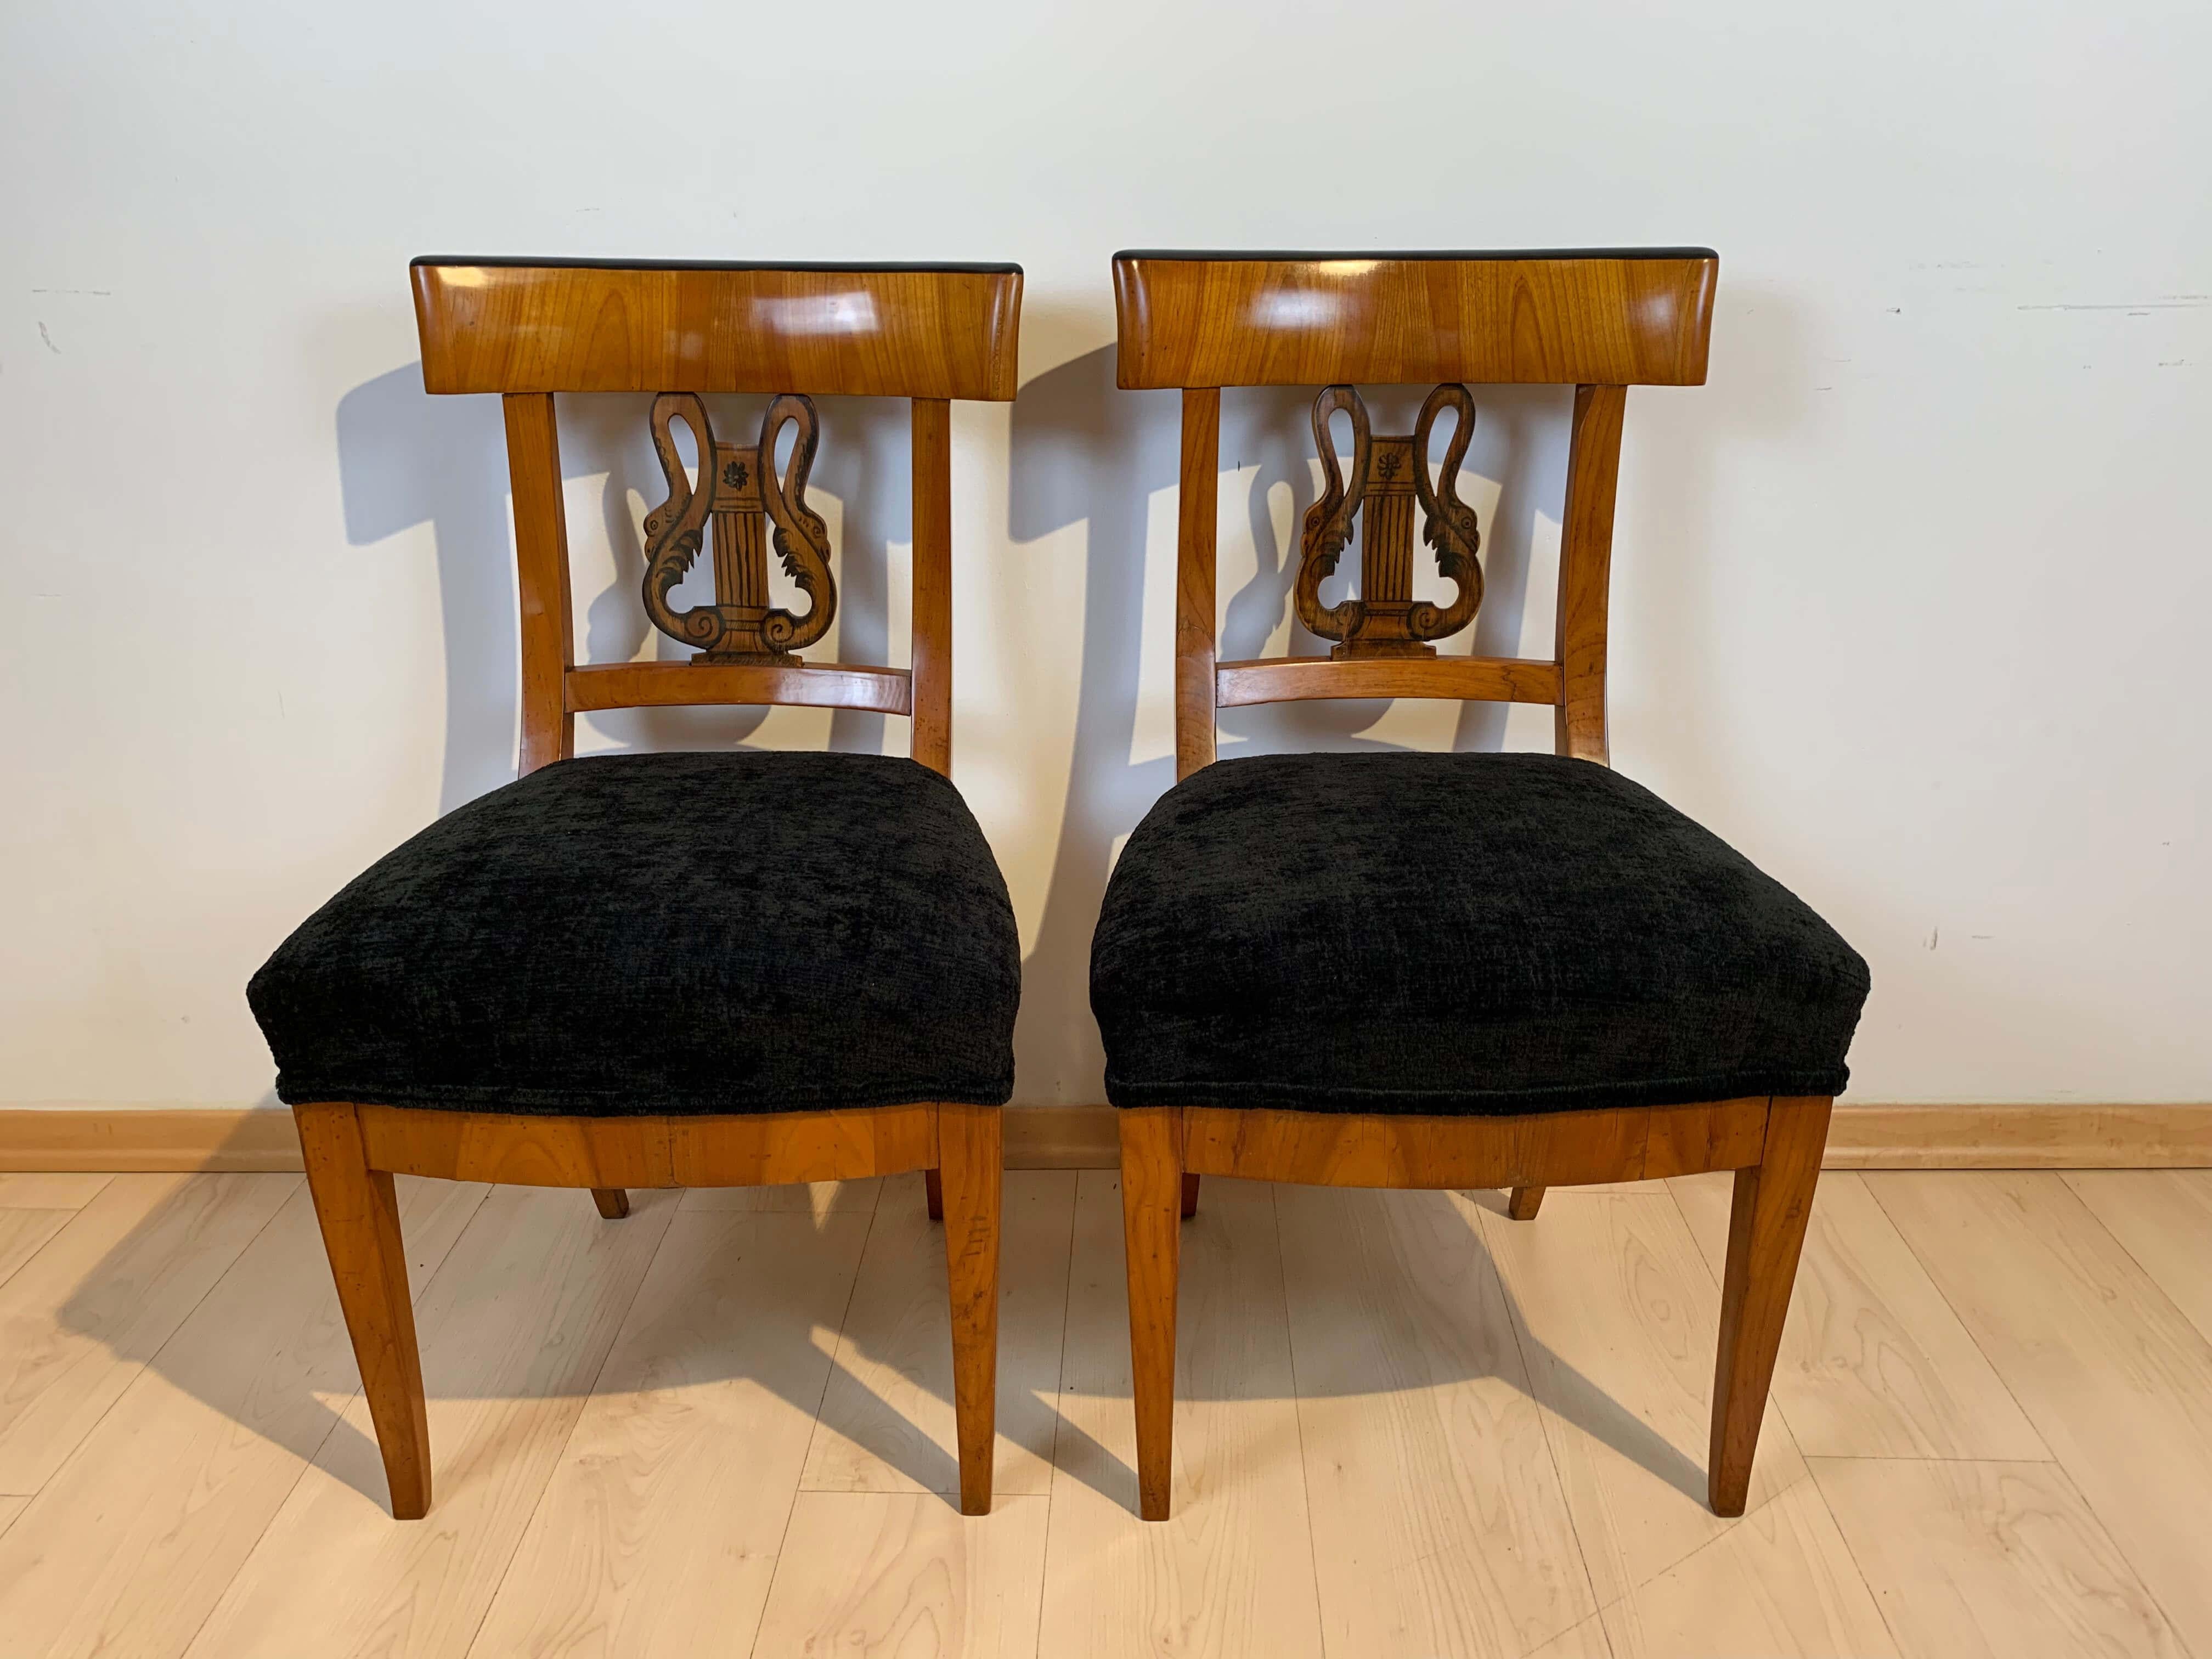 Ebonized Pair of Biedermeier Chairs, Cherry Wood, Painting, South Germany circa 1820